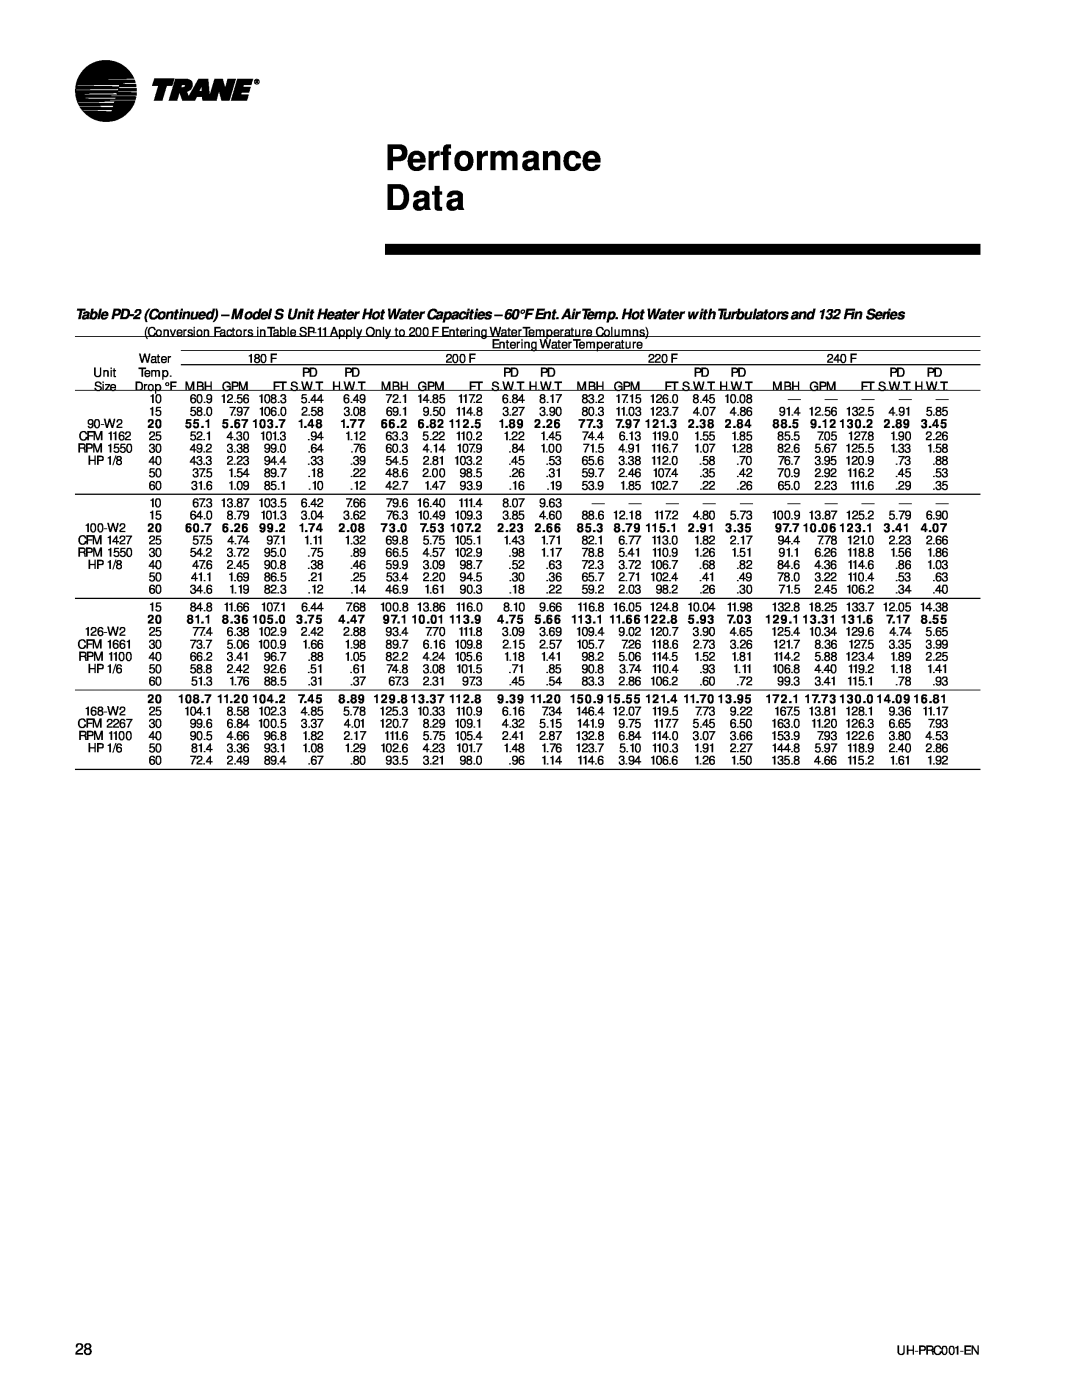 Trane UH-PRC001-EN manual Performance Data, Entering WaterTemperature 